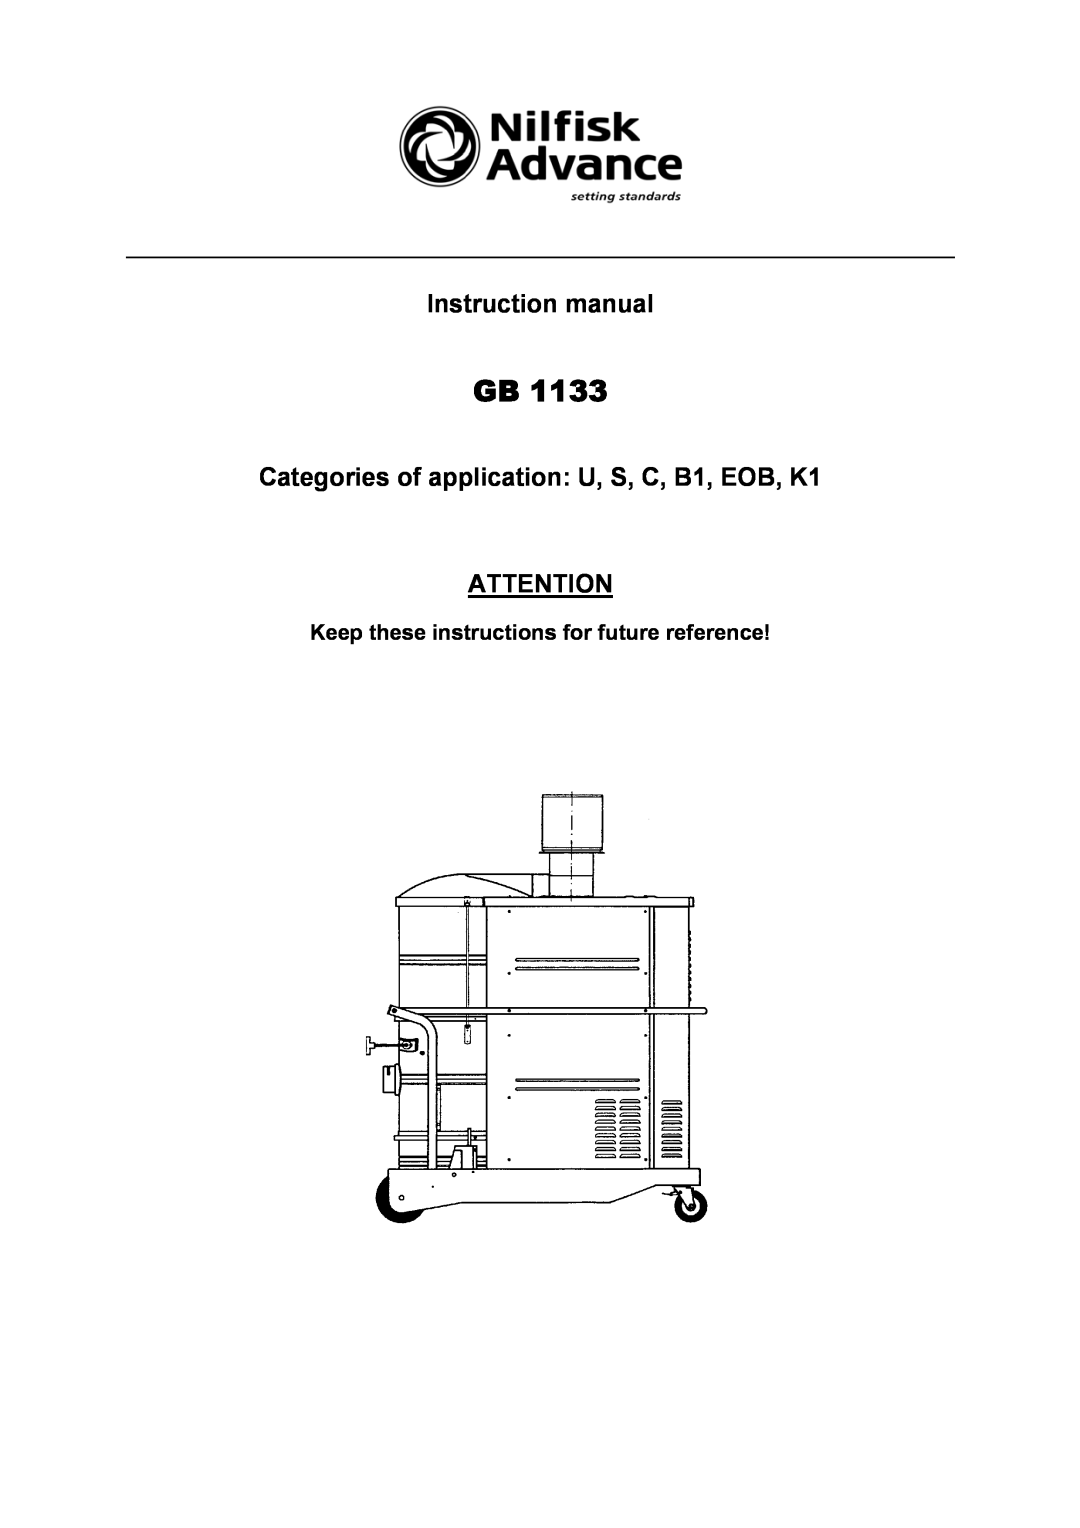 Nilfisk-Advance America GB 1133 instruction manual Categories of application U, S, C, B1, EOB, K1 